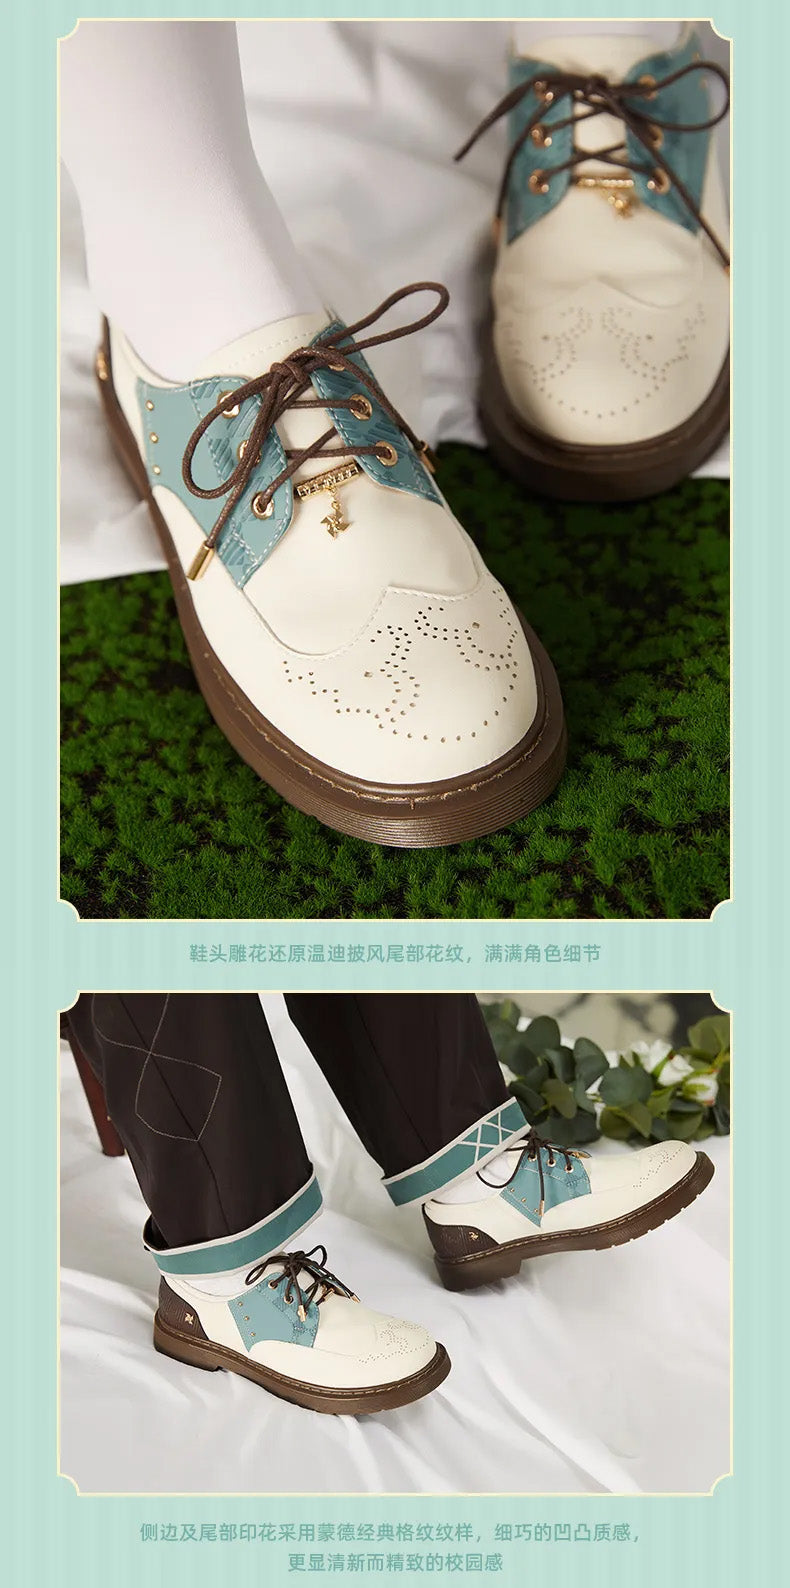 Genshin Impact Venti Impression Series Apparel - Oxford Shoes